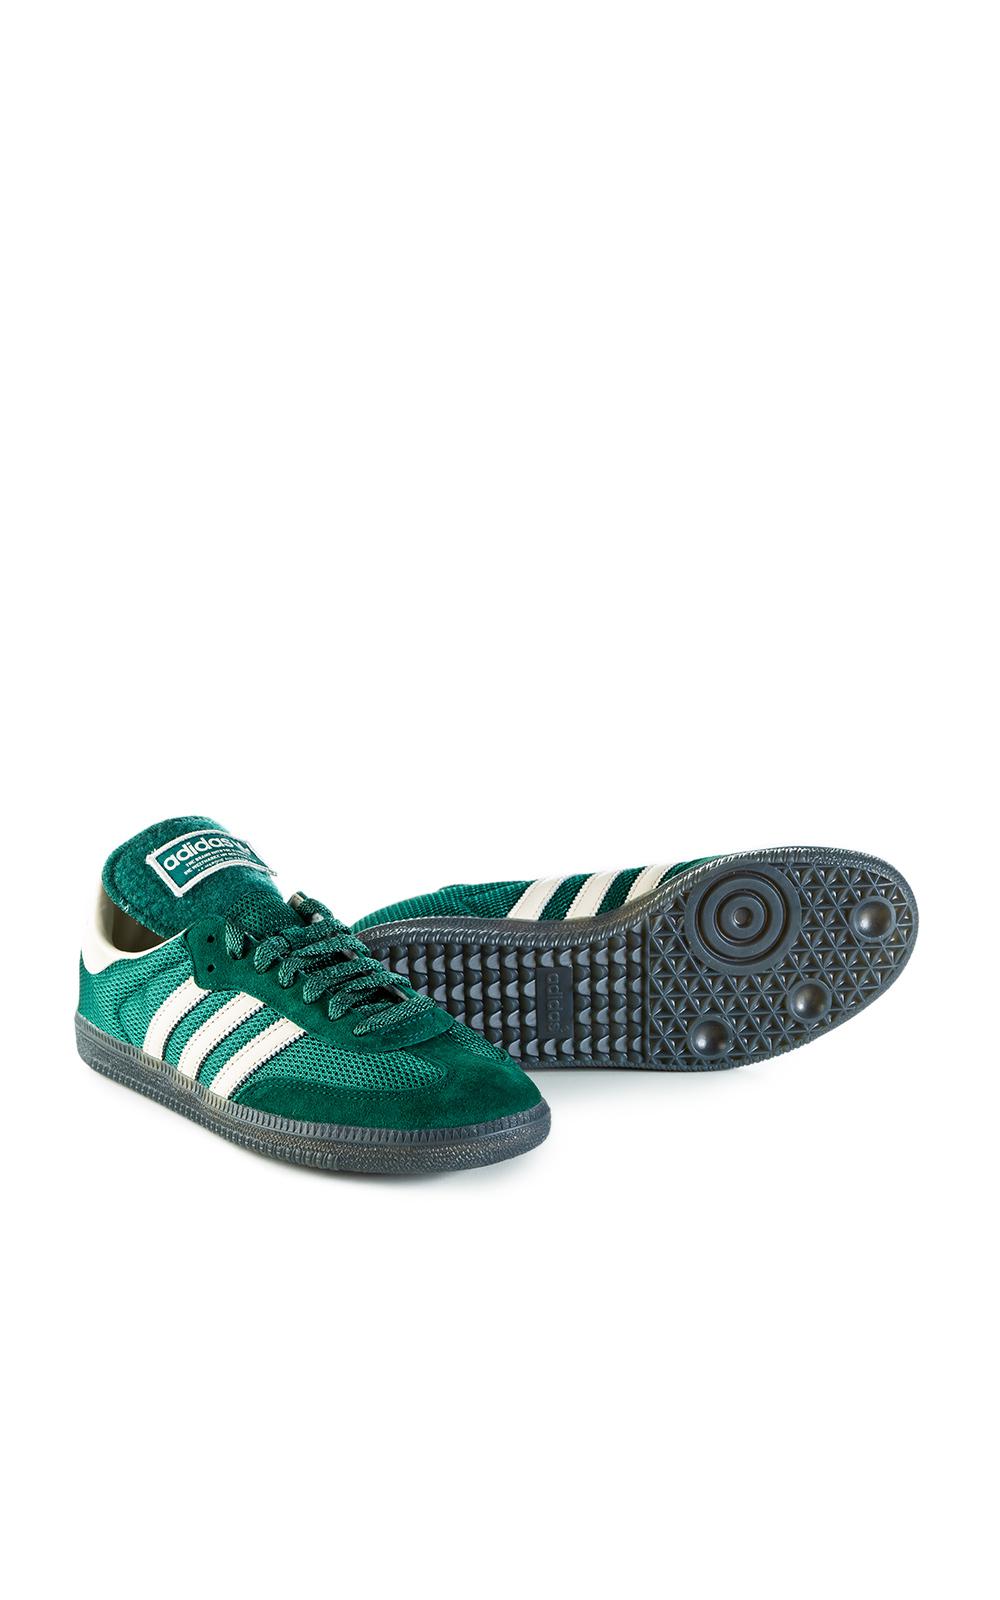 adidas samba lt green